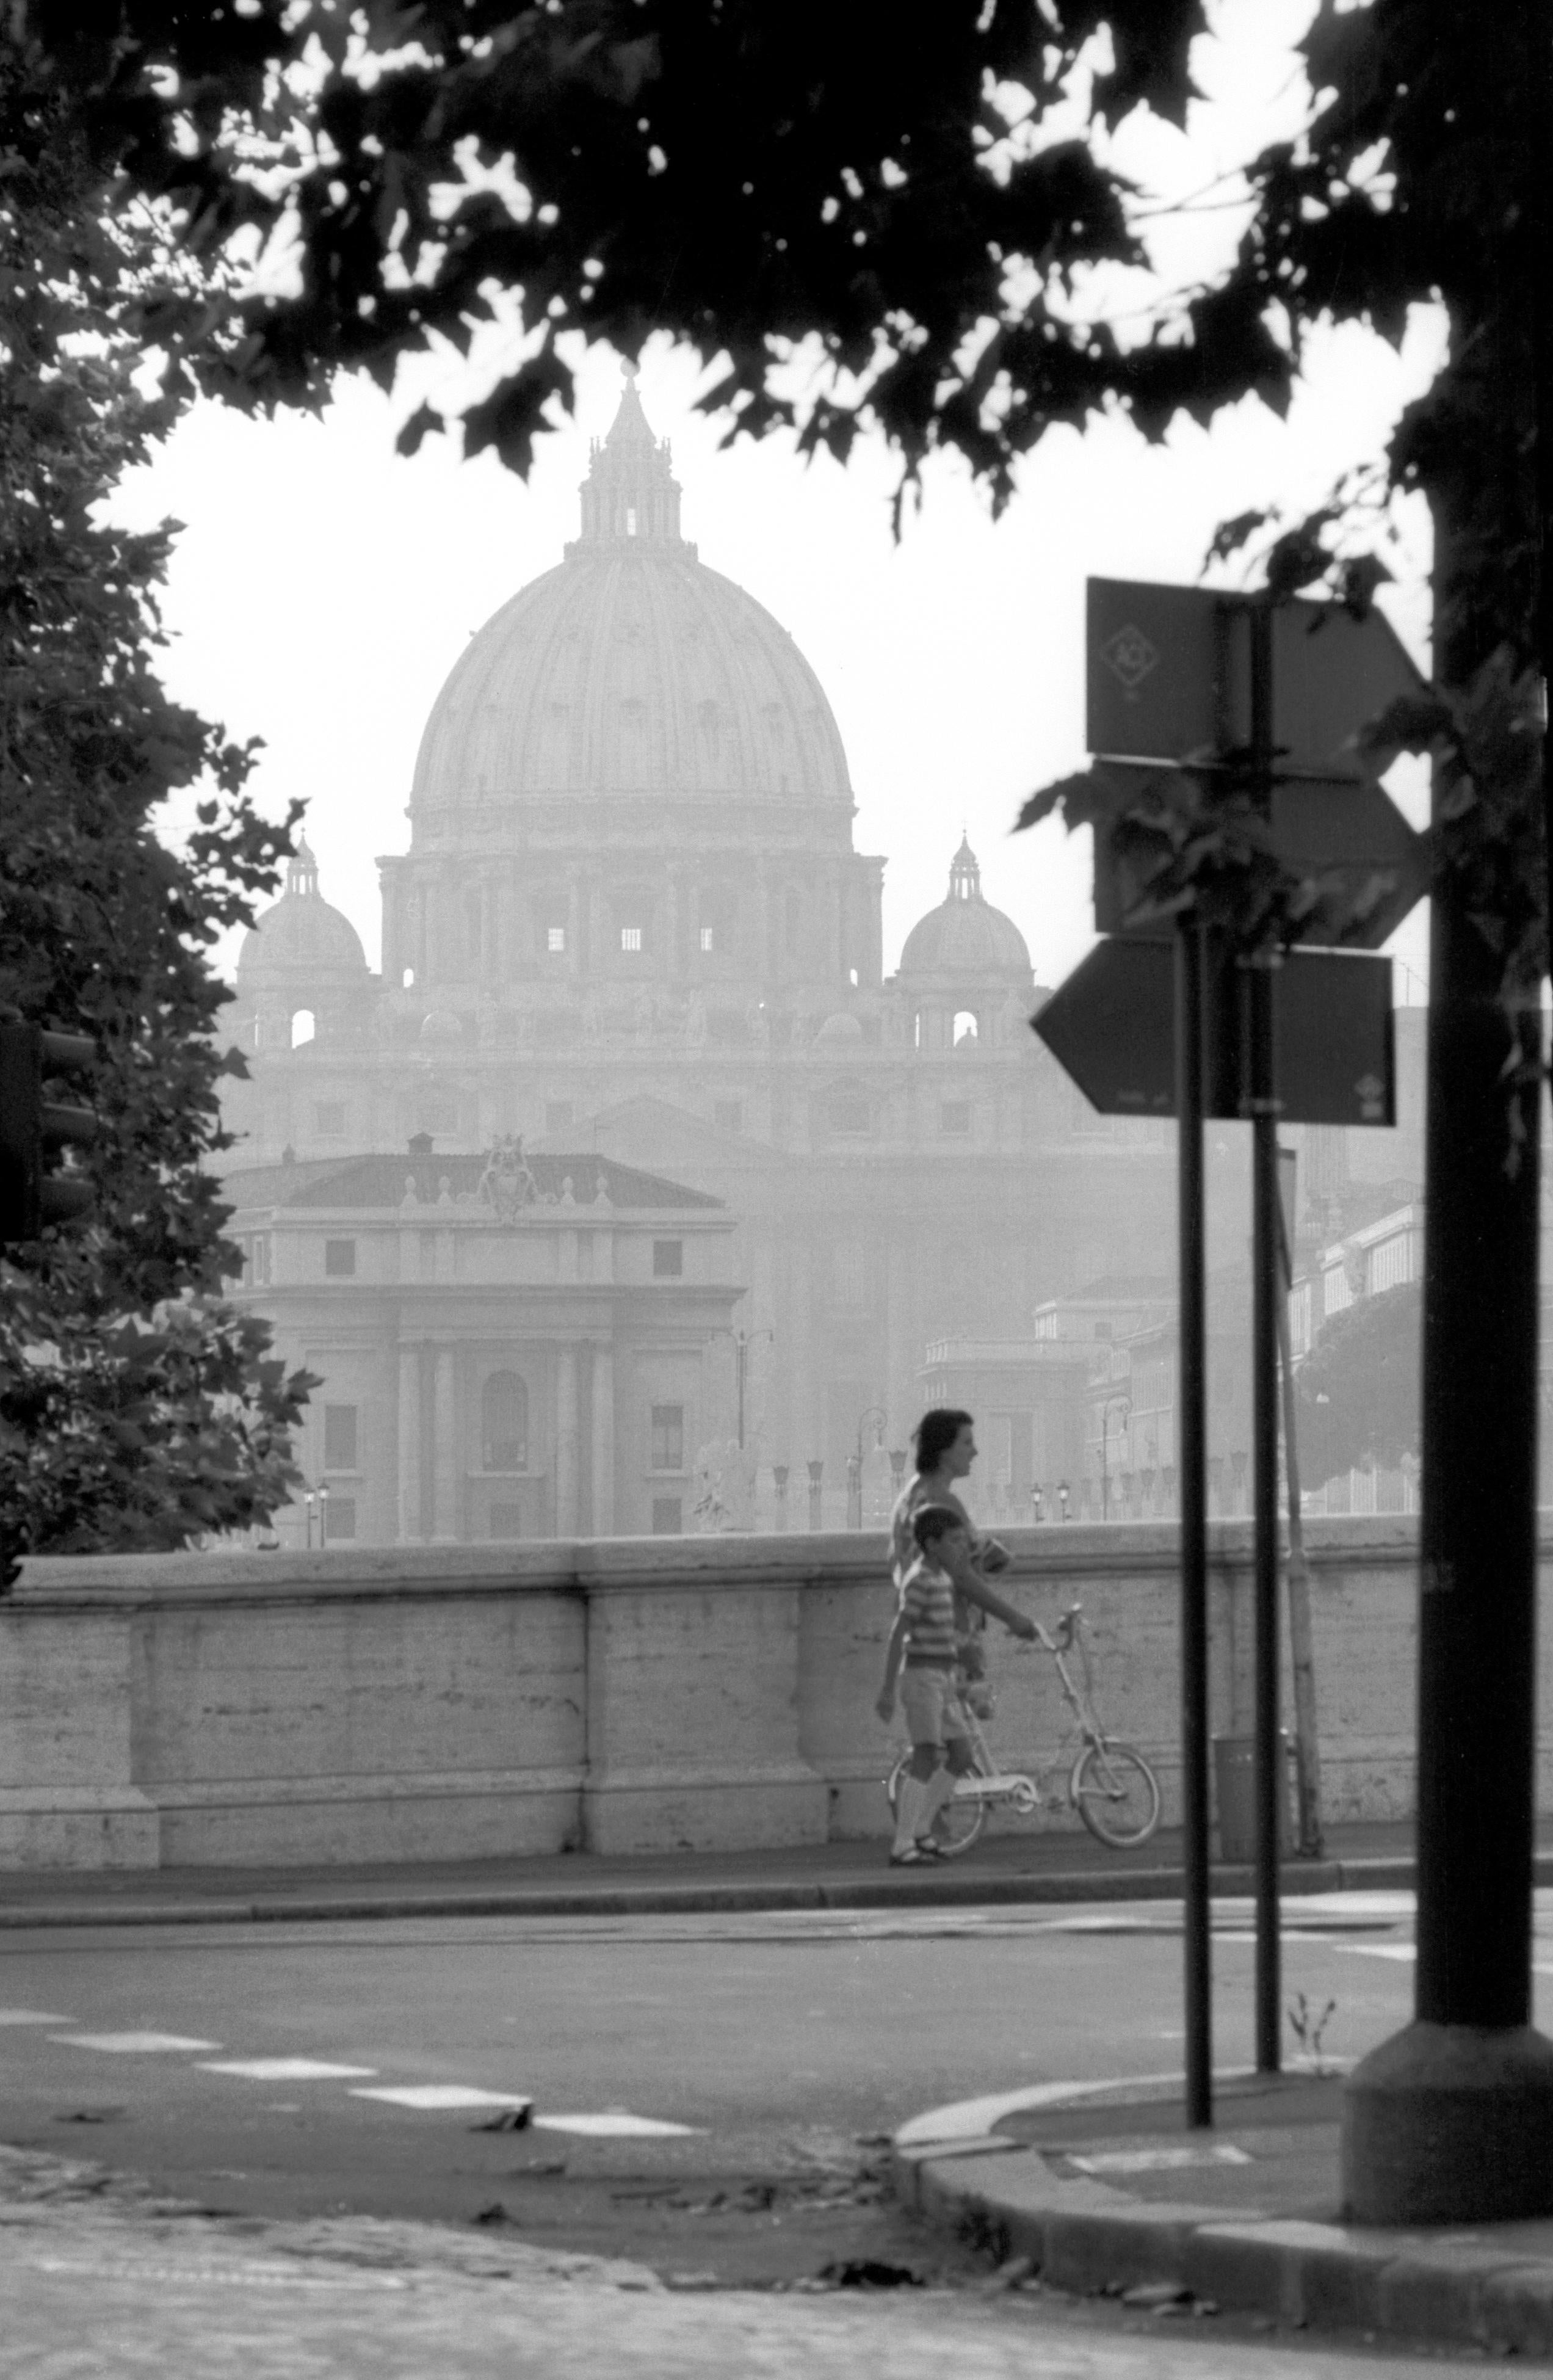 100th Anniversary Celebration Coffret # 7 - Vaticano - Vintage Photography - Black Black and White Photograph by Fabrizio La Torre